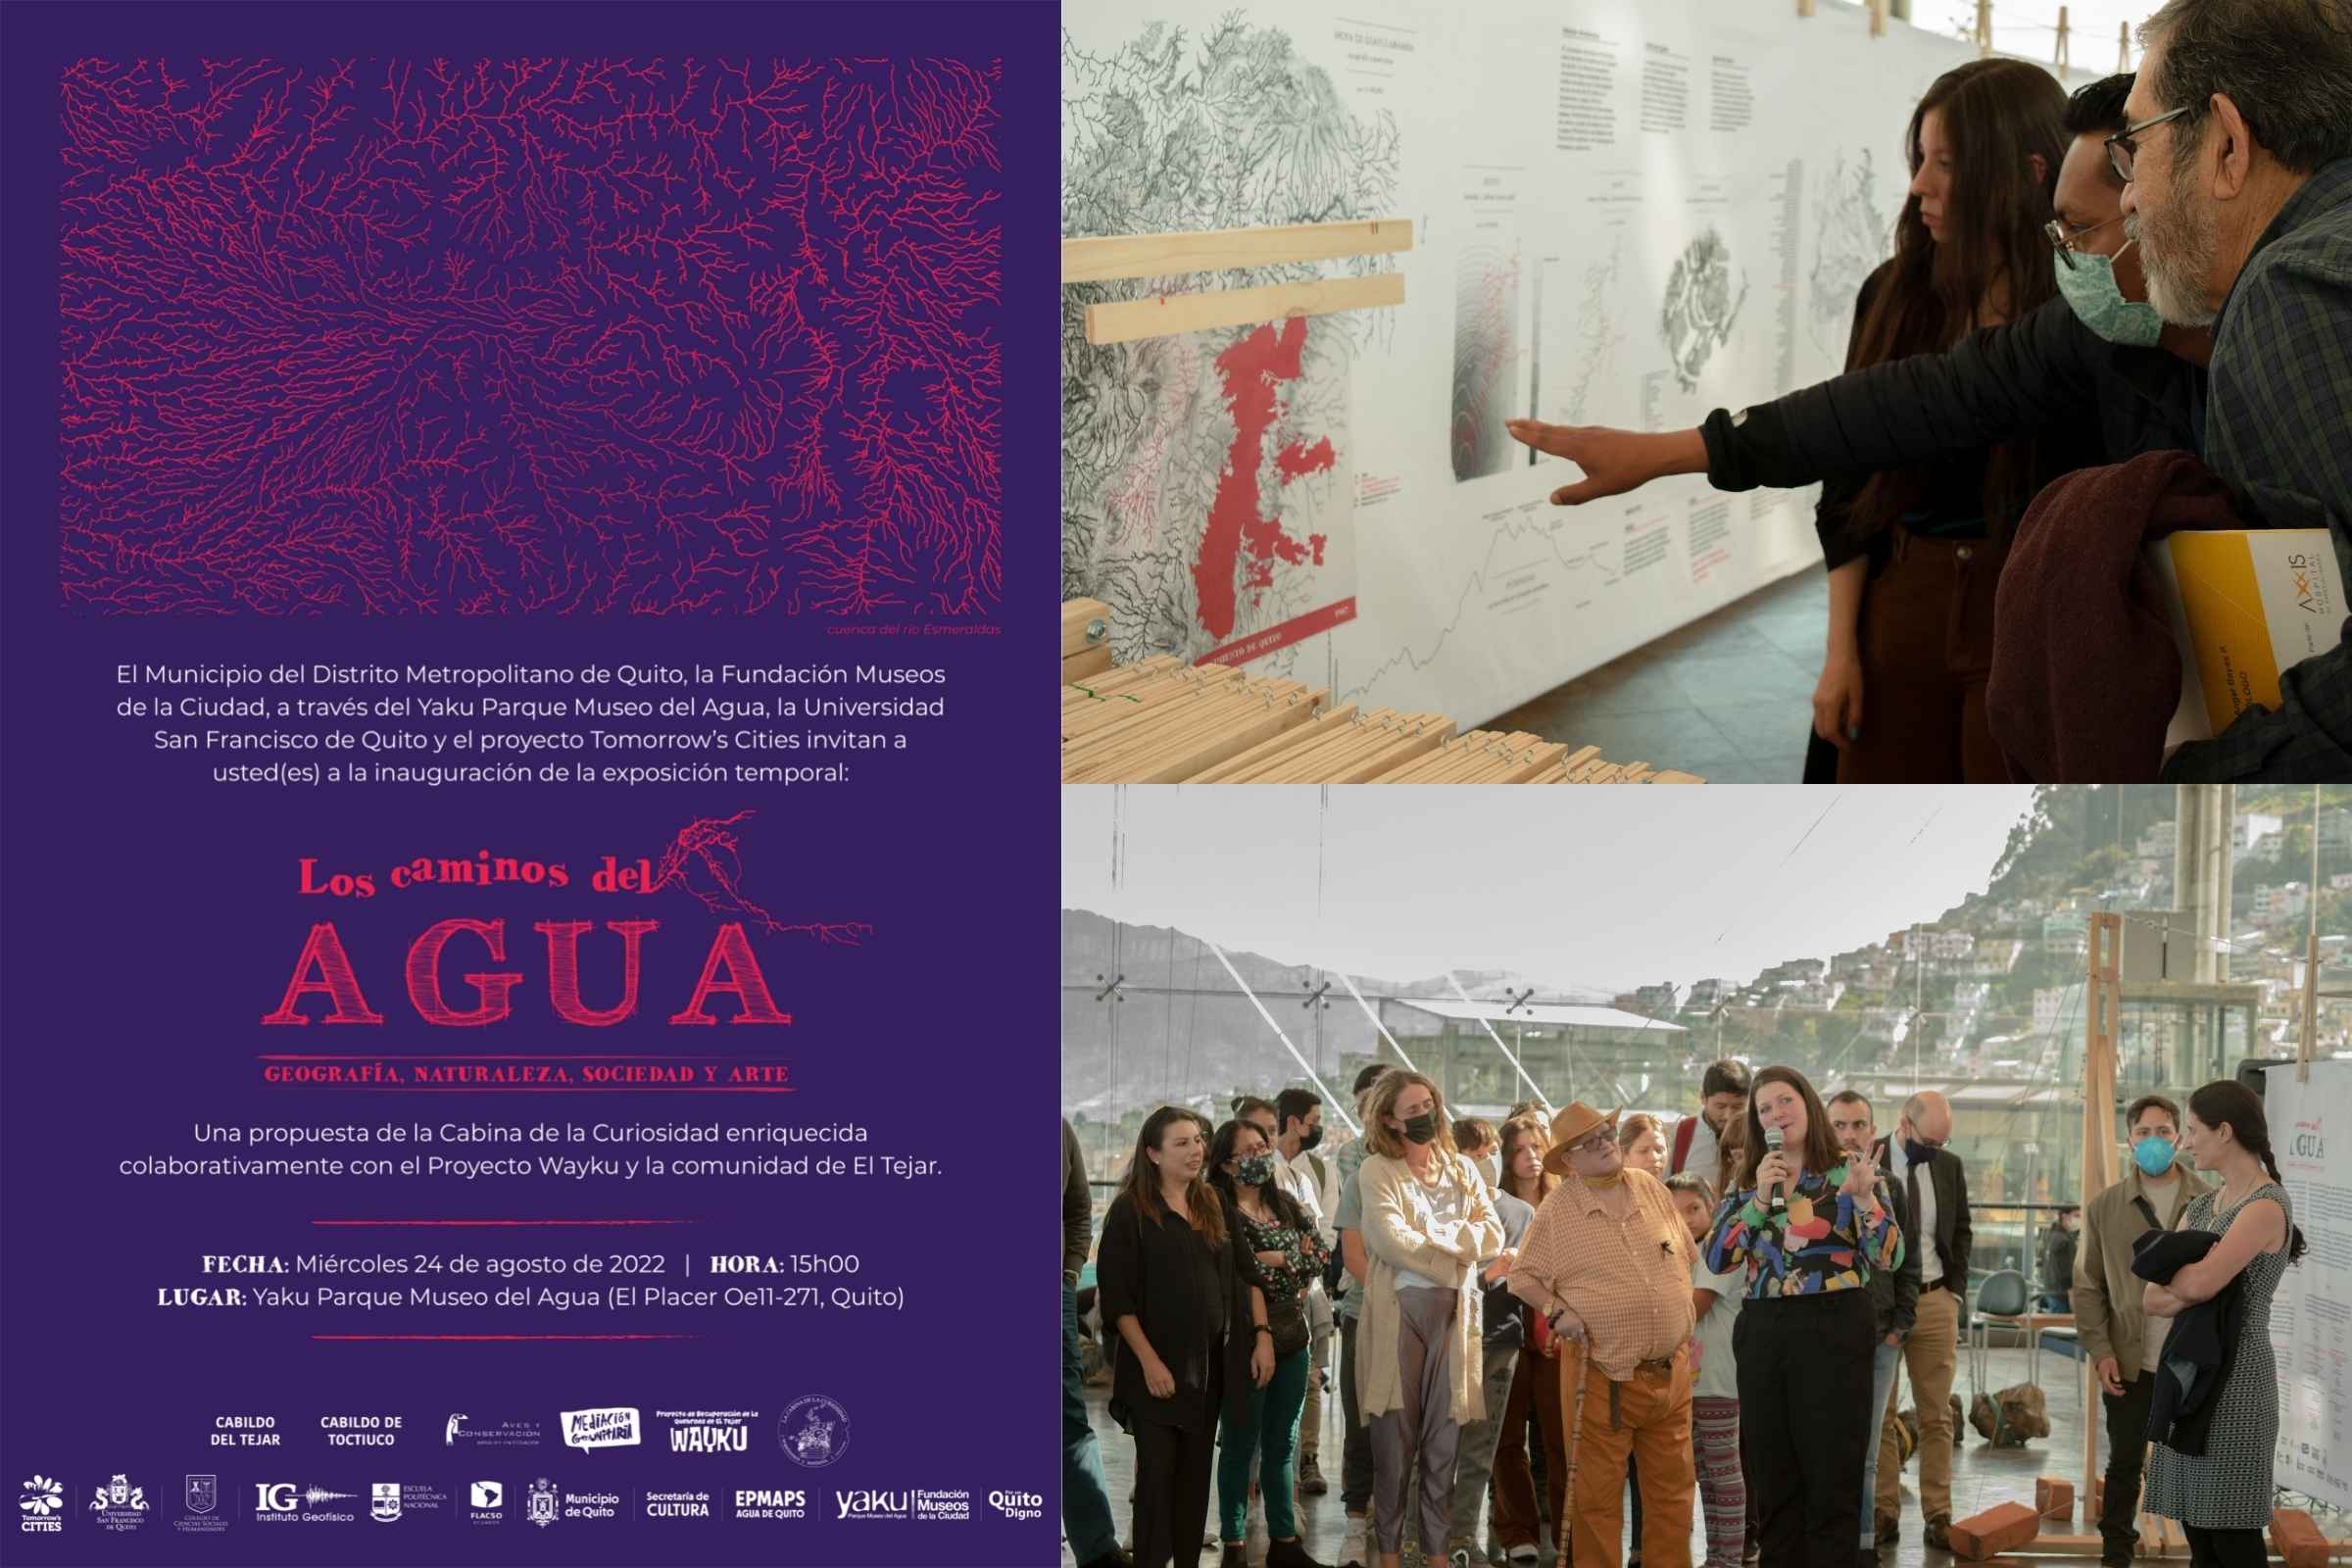 The Caminos del Agua exhibition inauguration ceremony